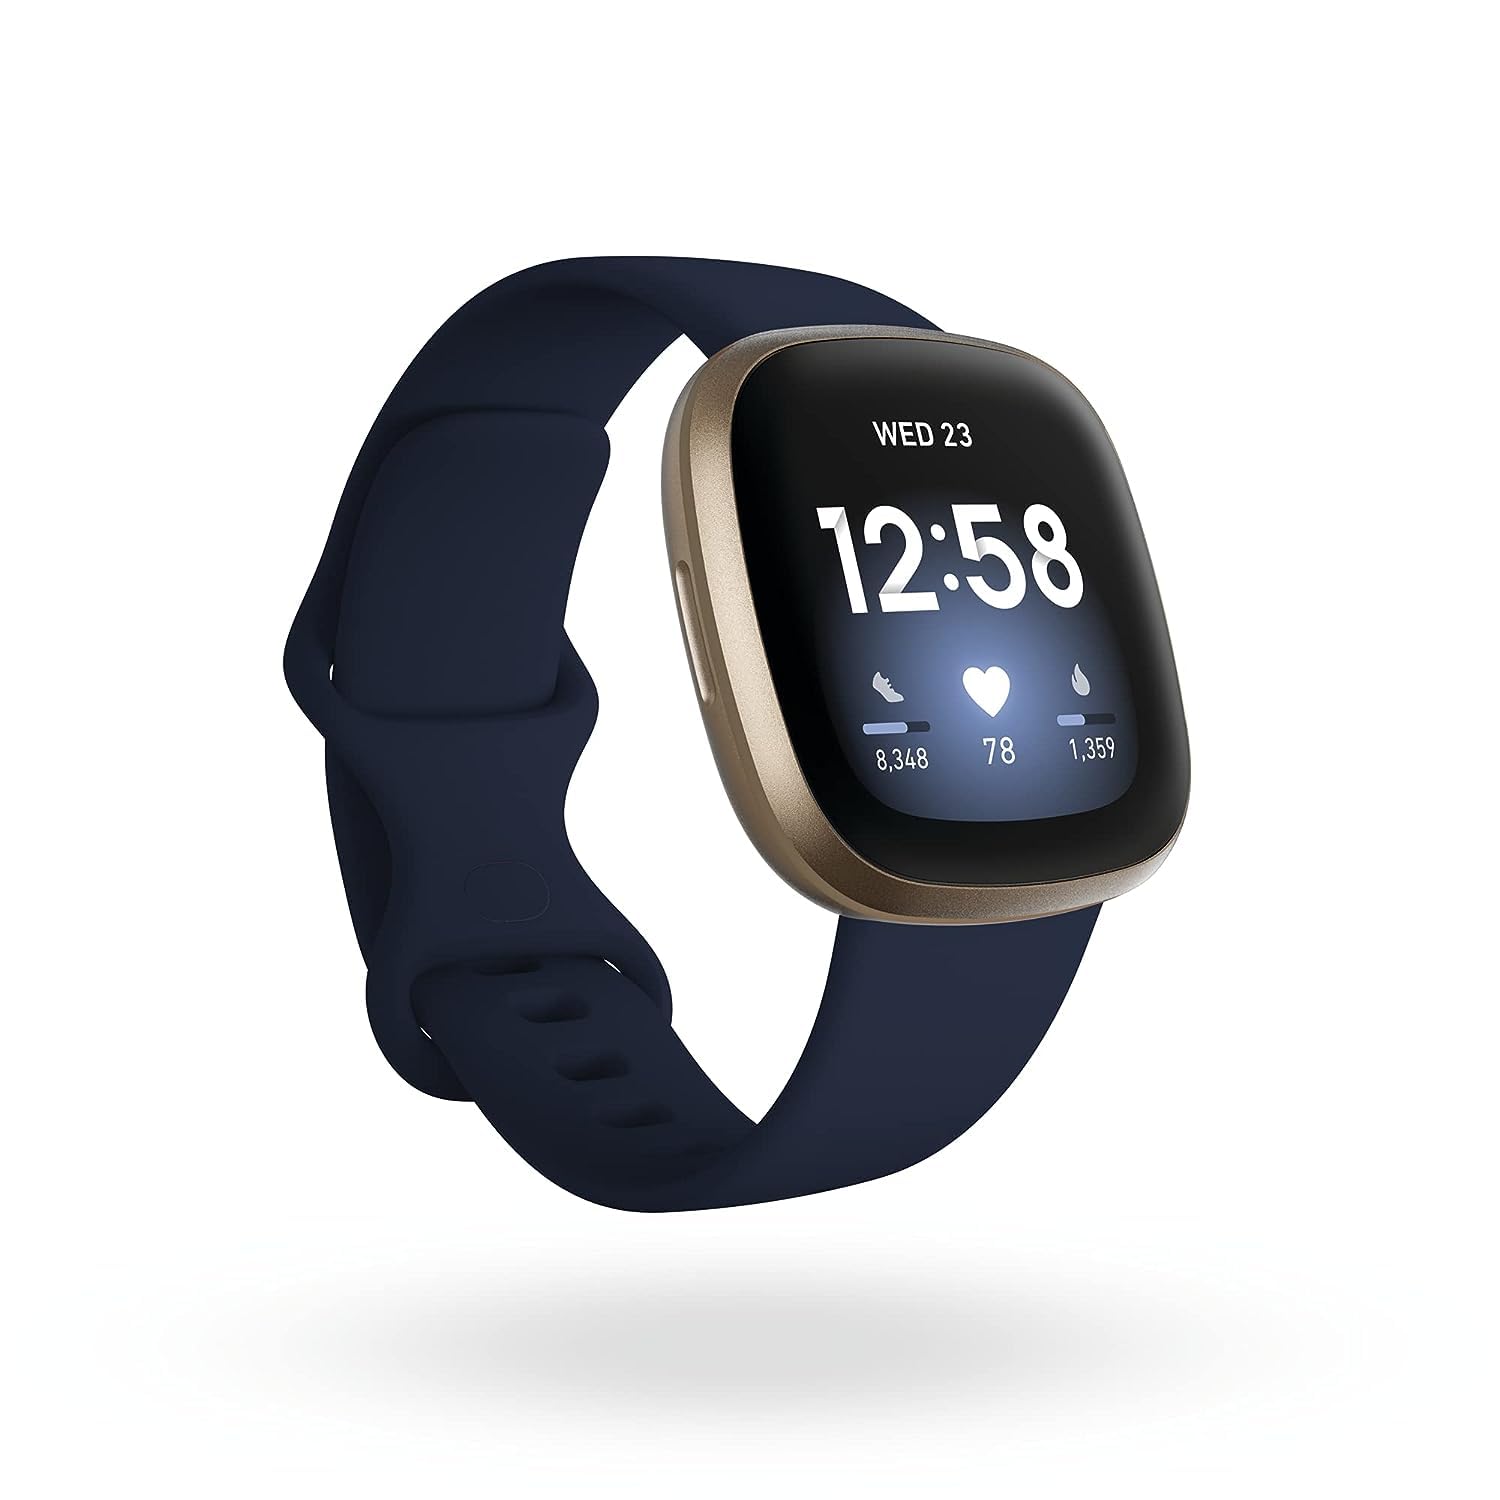 Fitbit Versa 3 Health & Fitness Smartwatch